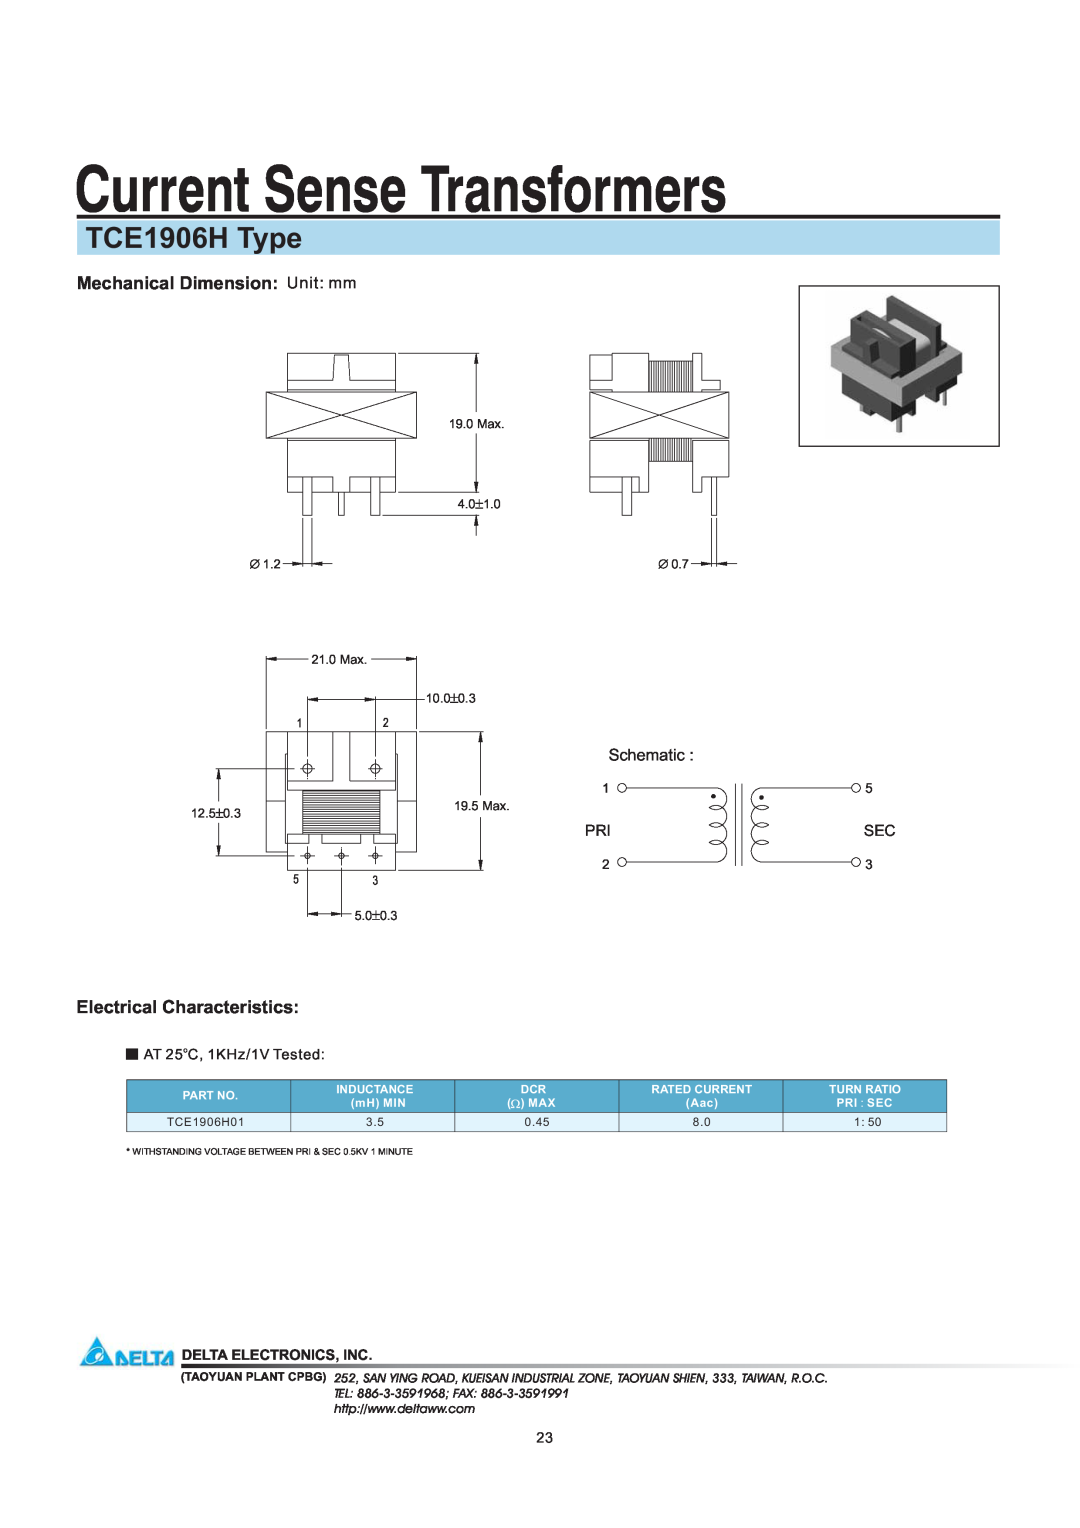 Delta Electronics manual Current Sense Transformers, TCE1906H Type, Mechanical Dimension Unit mm, Schematic, 19.0 Max 